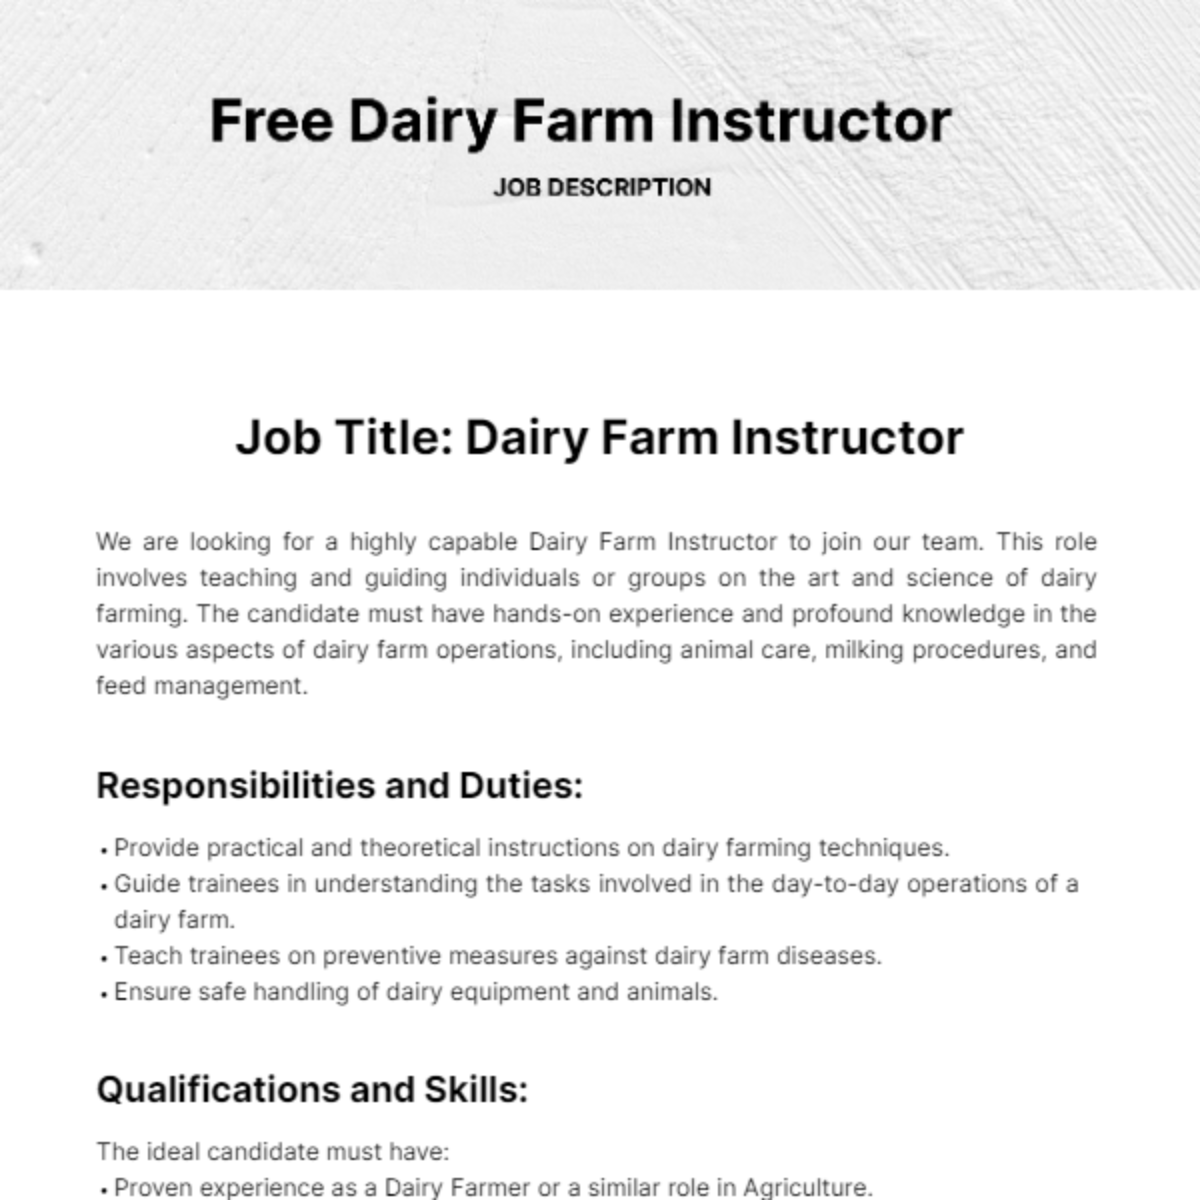 Free Dairy Farm Instructor Job Description Template